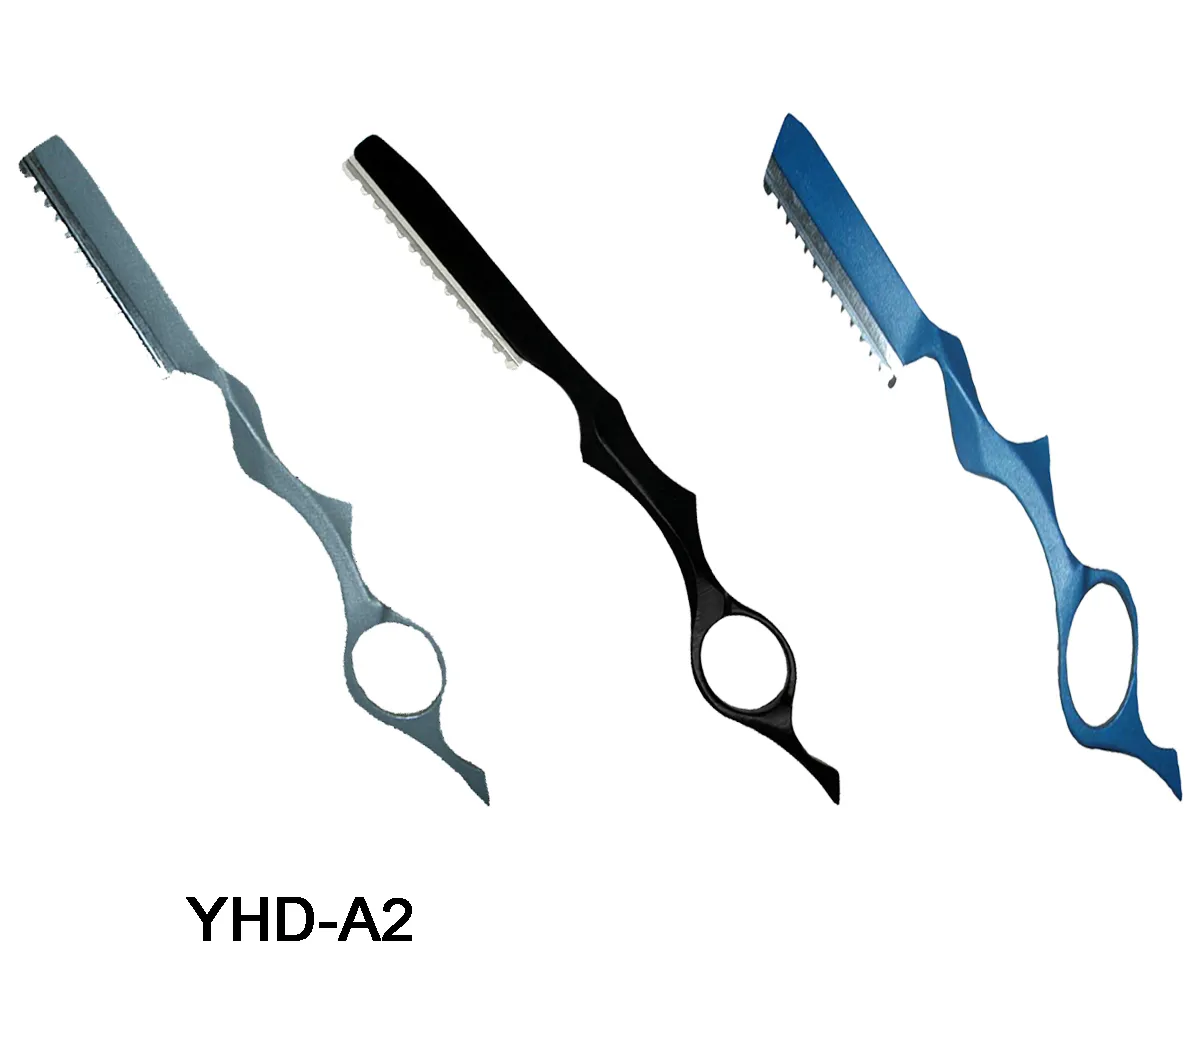 YHD-A1 colored hair razor